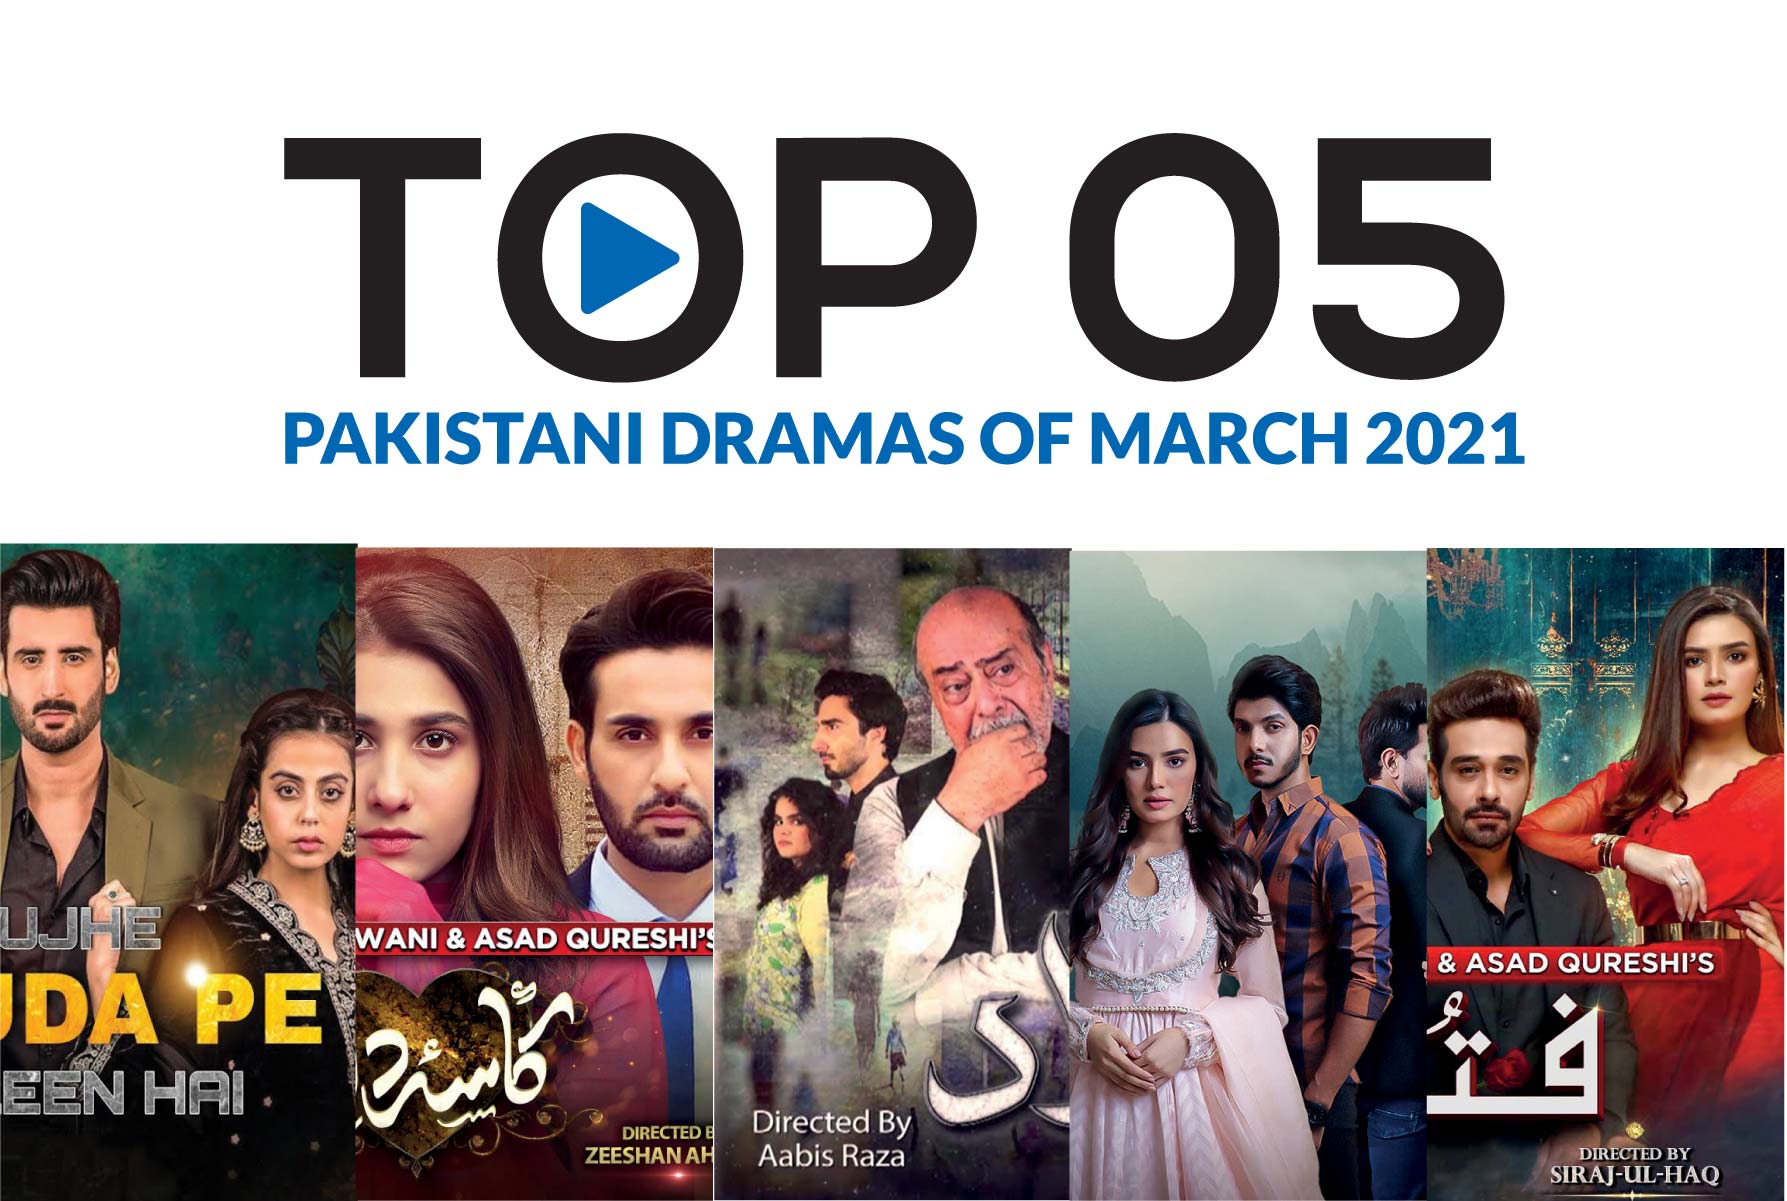 Top 5 Pakistani dramas of March 2021